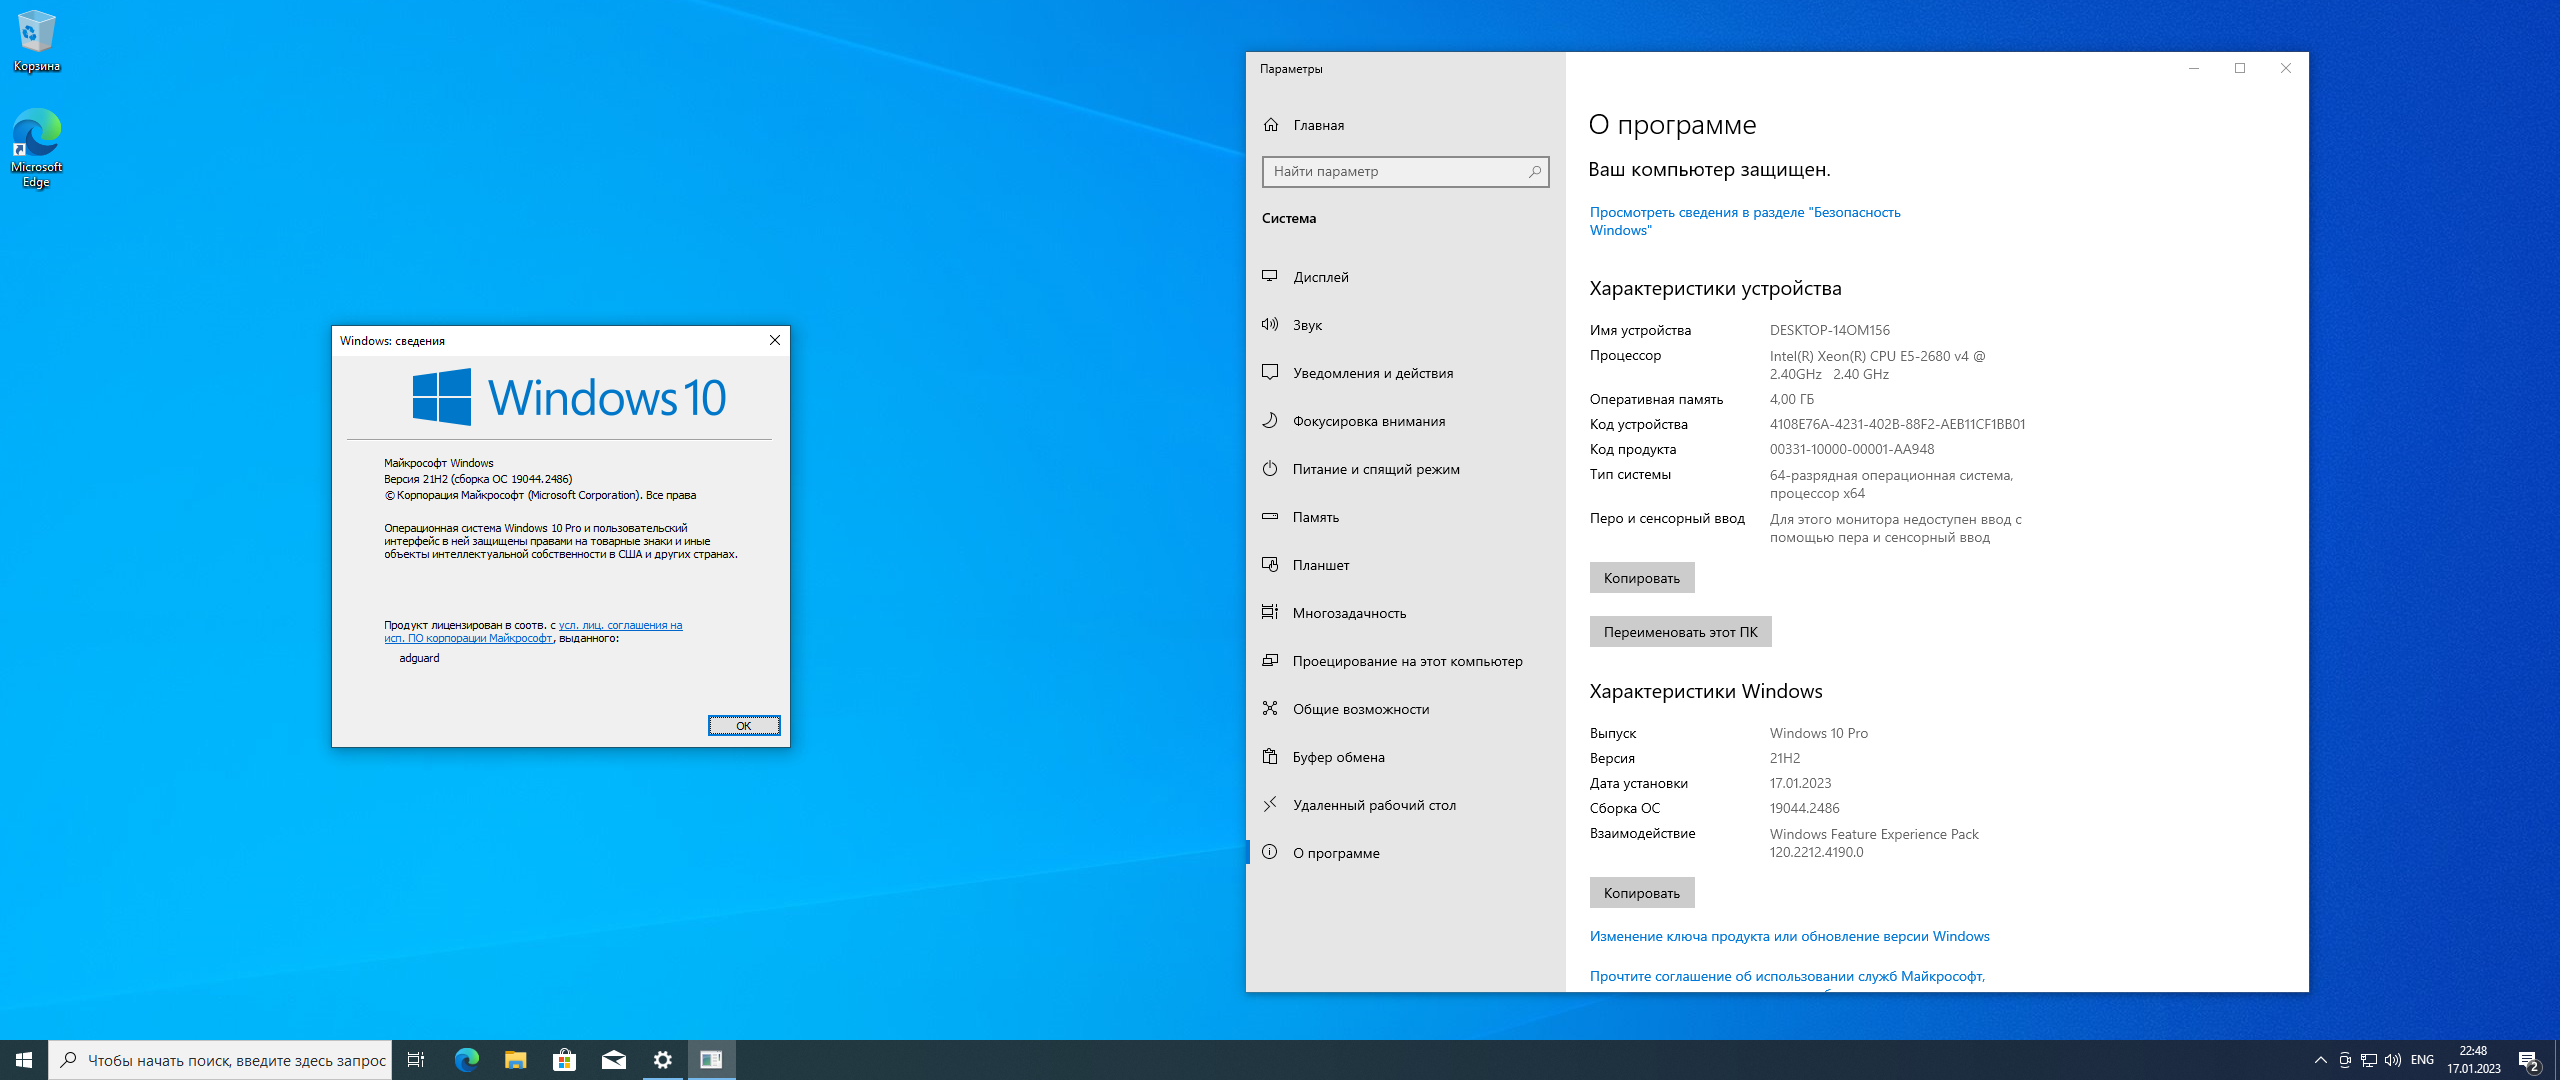 Microsoft Windows 10.0.19044.2486, Version 21H2 (Updated January 2023) - Оригинальные образы от Microsoft MSDN [Ru]